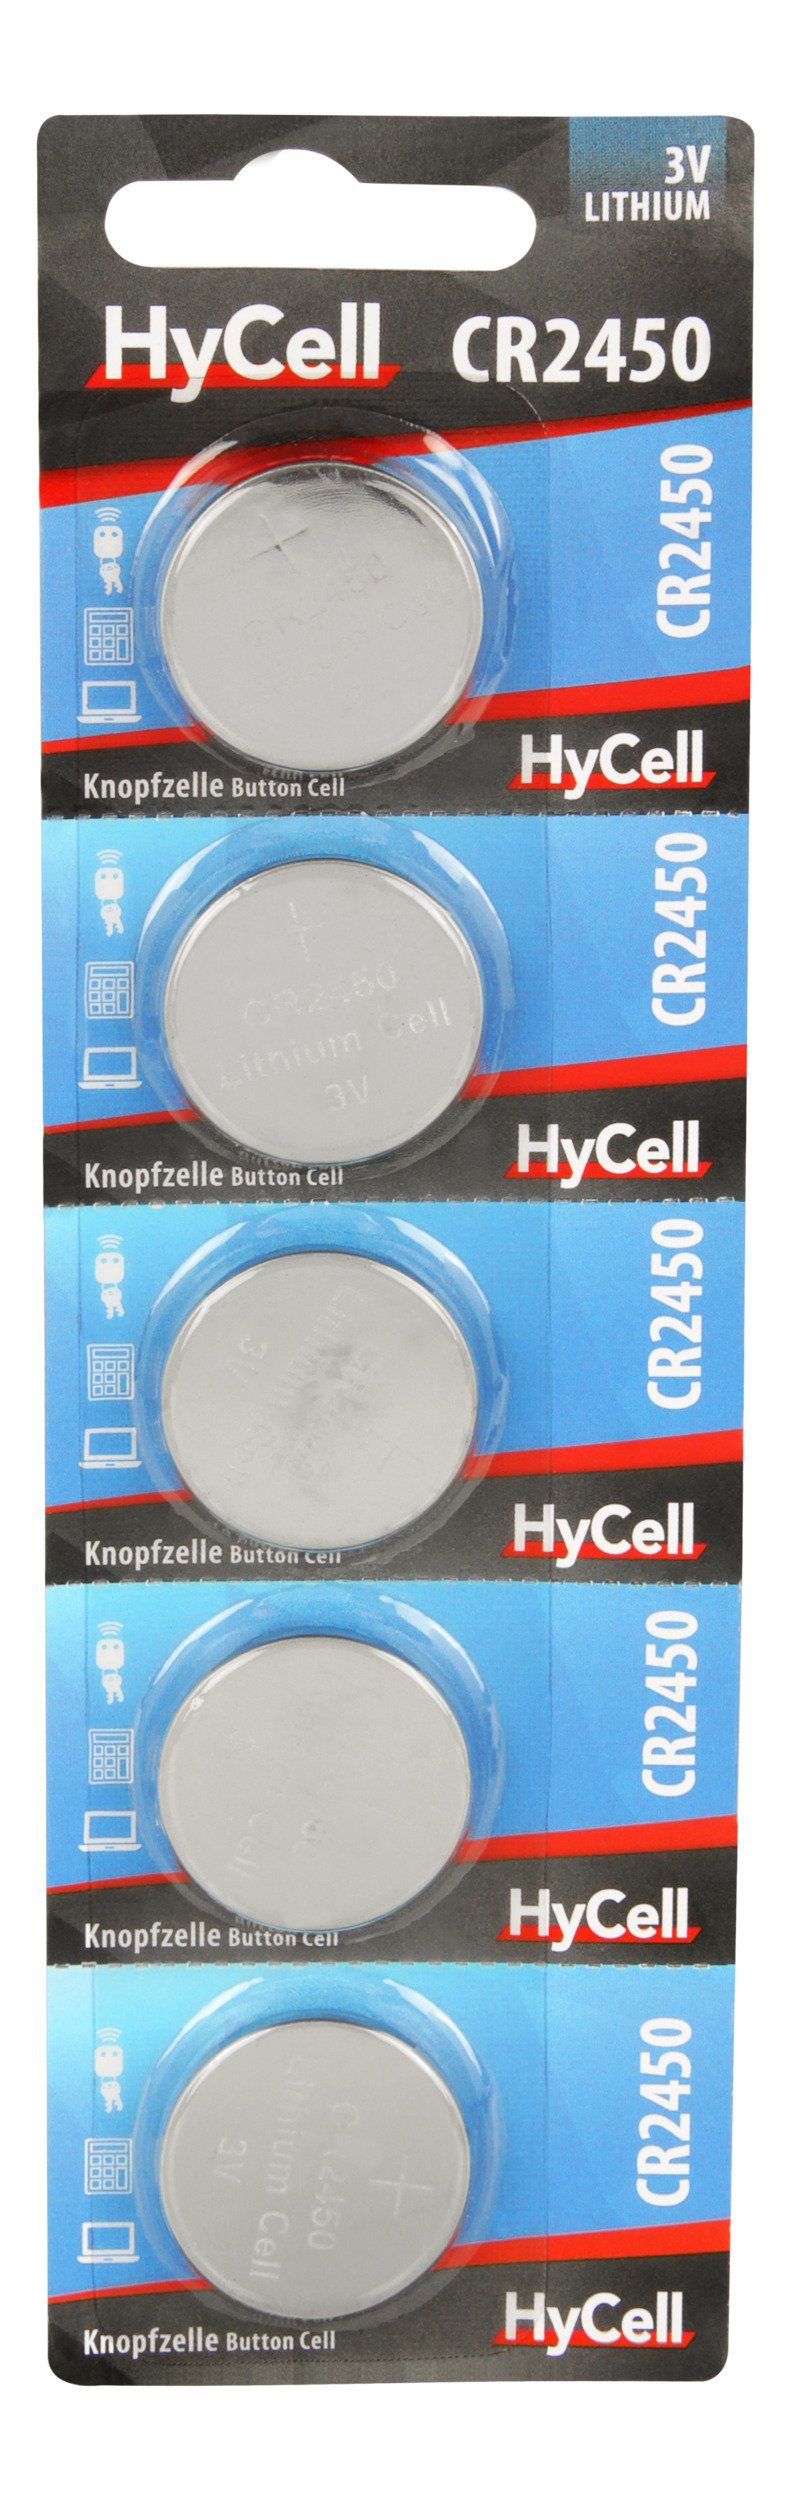 HyCell 5er Pack Lithium Knopfzelle 5 3V CR2450 - Knopfzellen Stück - Knopfbatterien